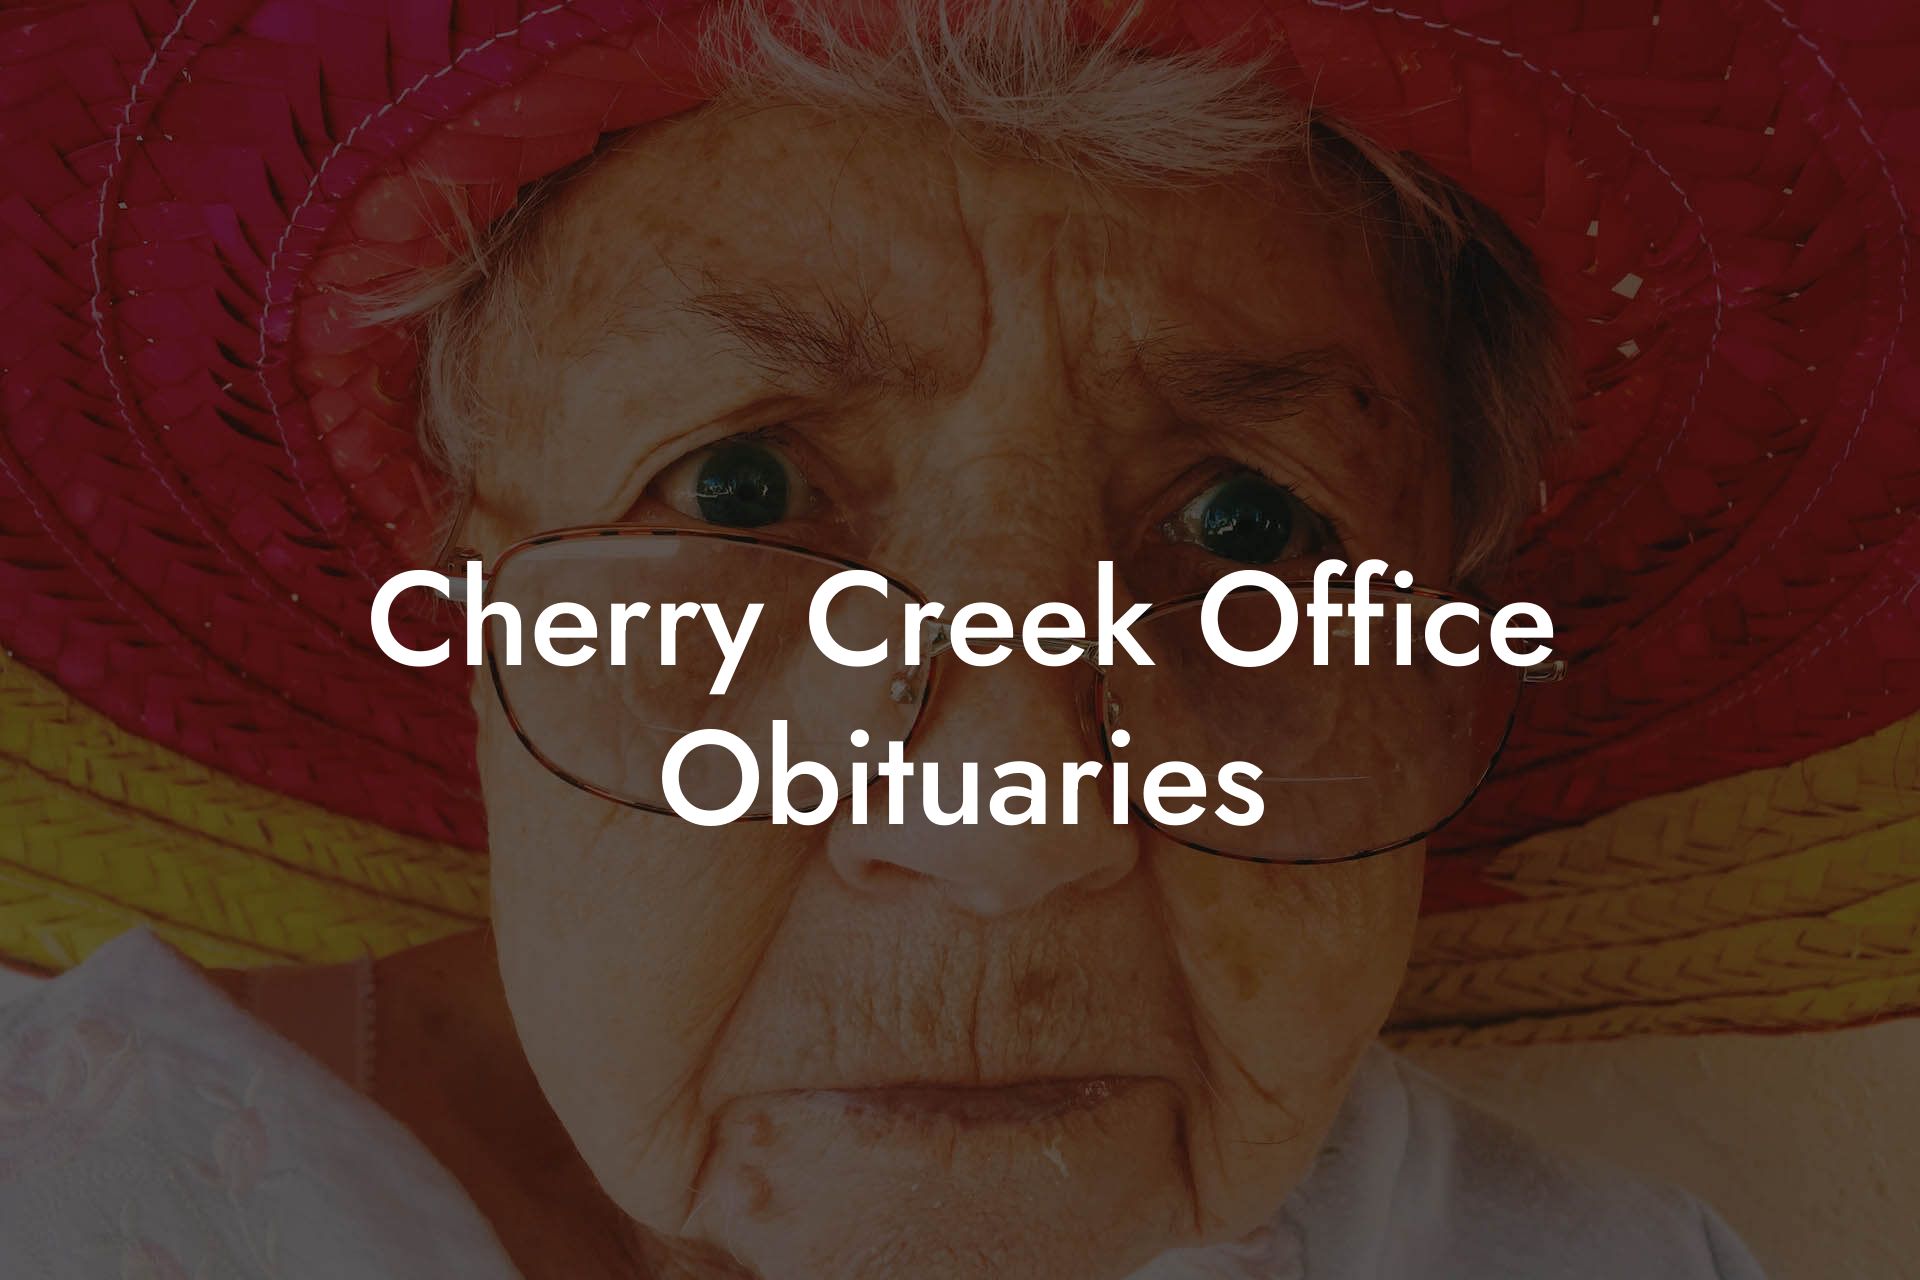 Cherry Creek Office Obituaries